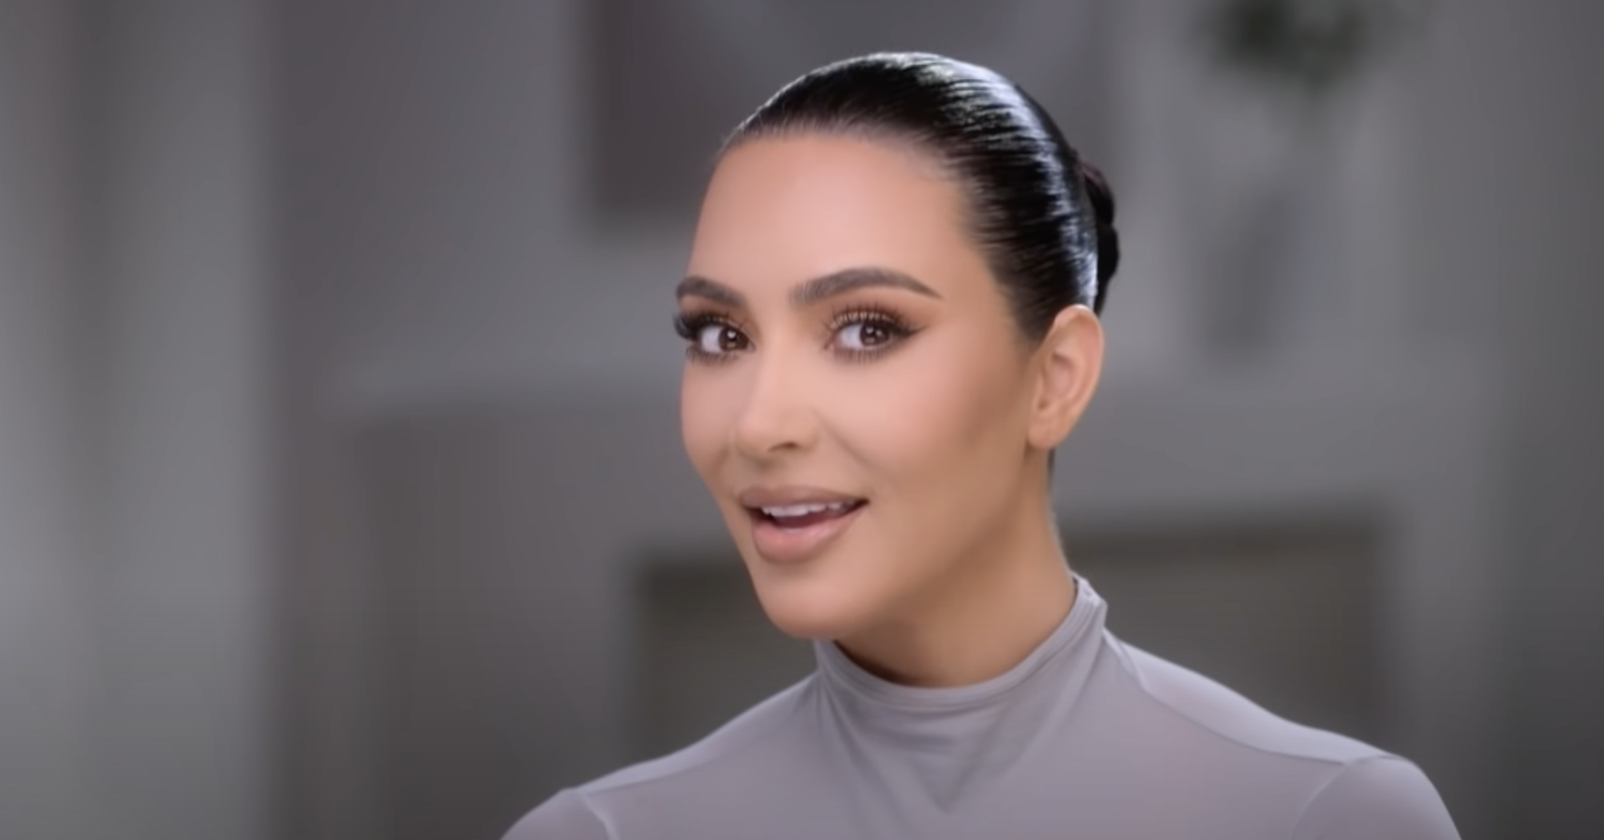 Kim Kardashian closeup